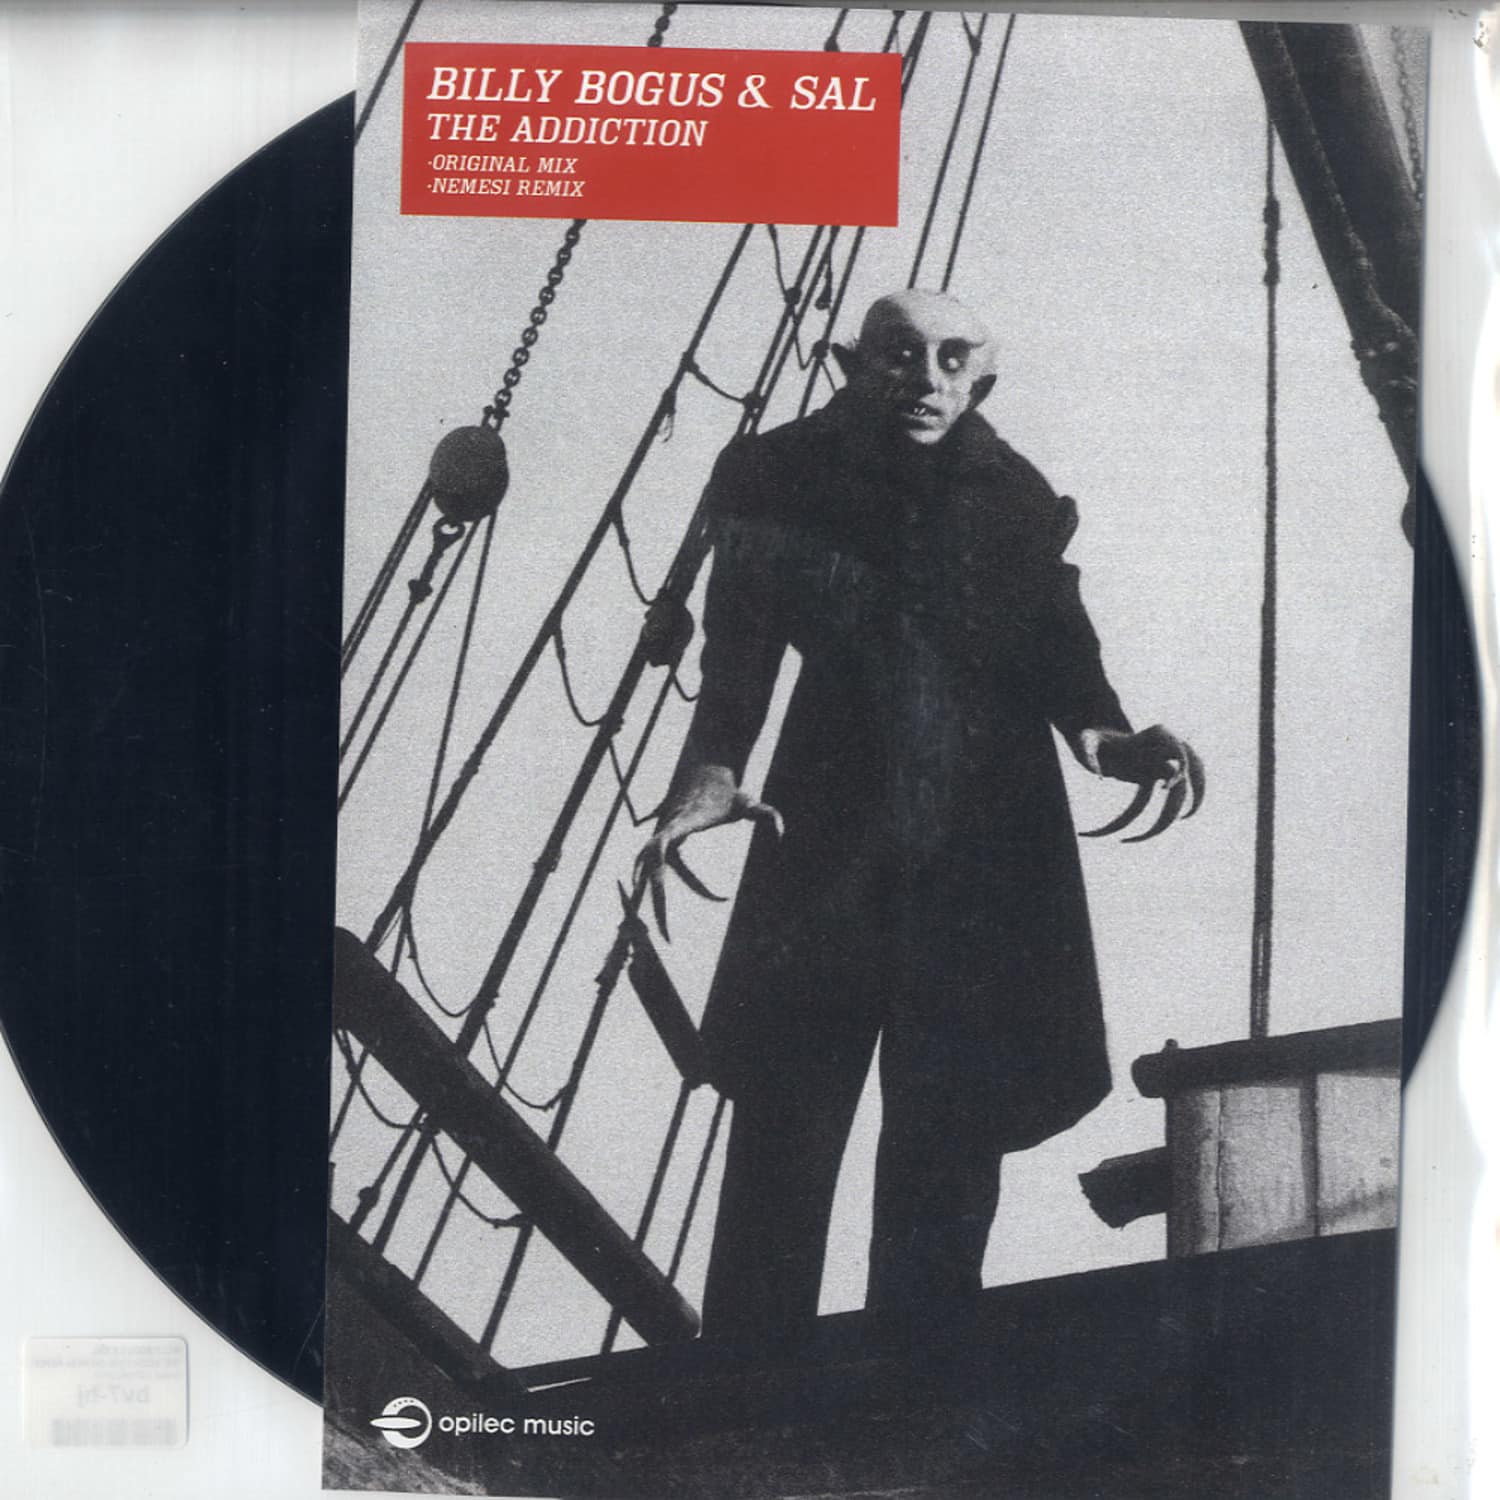 Billy Bogus & Sal - THE ADDICTION 